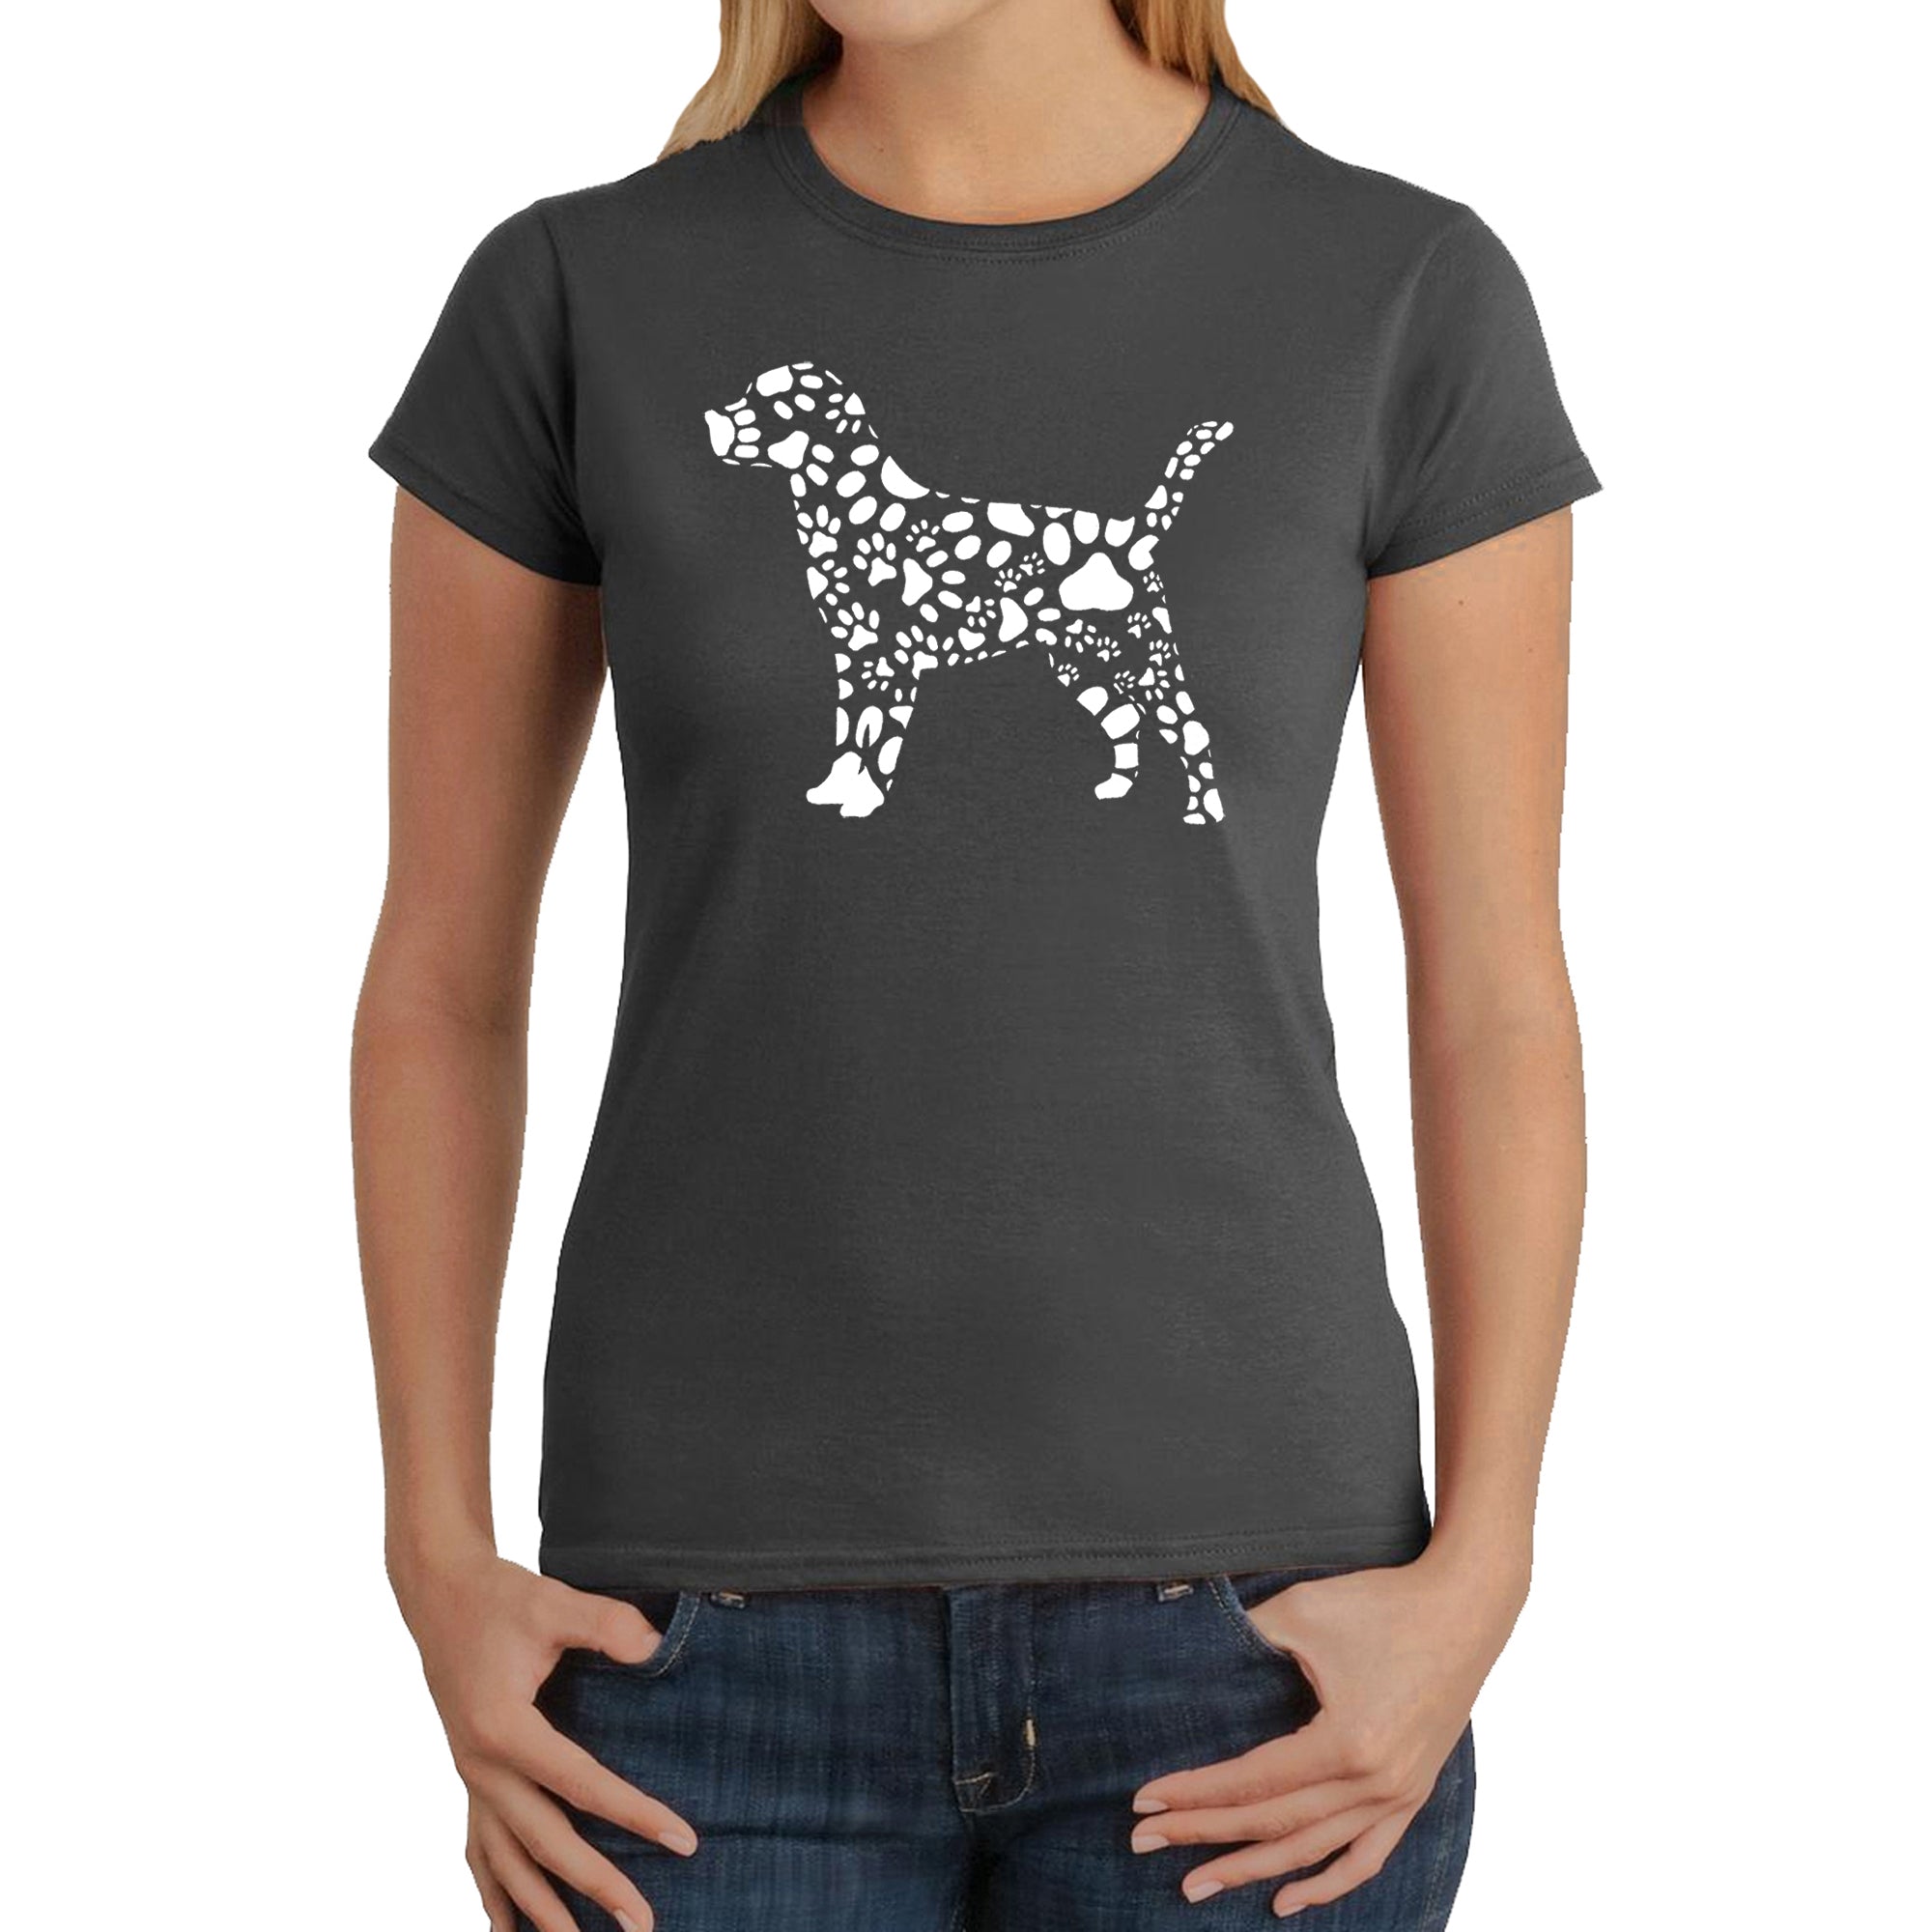 Dog Paw Prints - Women's Word Art T-Shirt - Grey - Medium